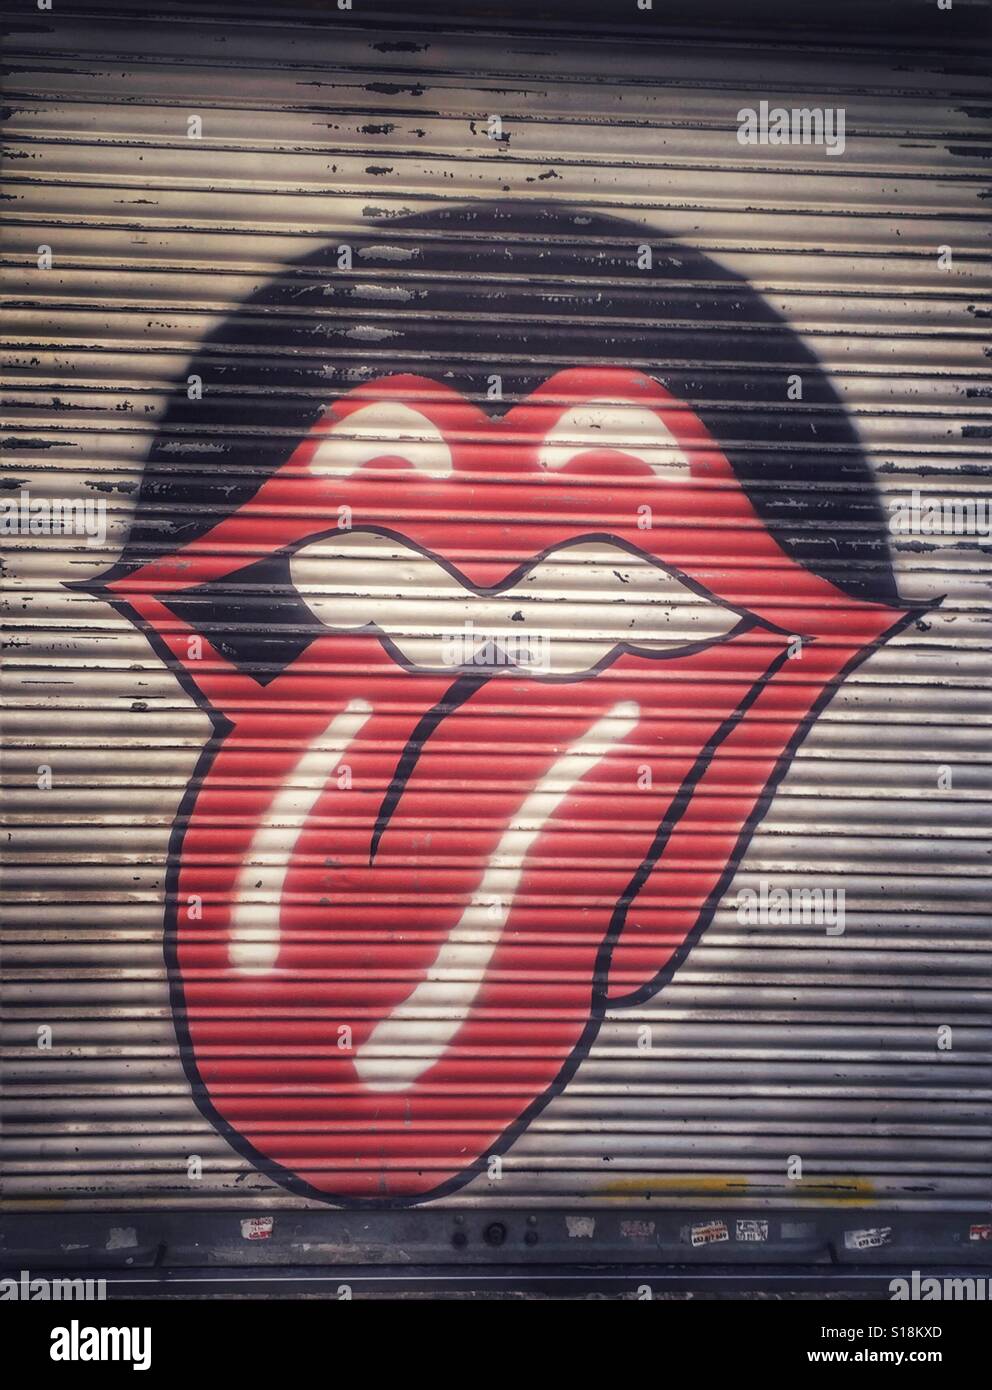 Rolling Stones motif graffitti on a shutter Stock Photo